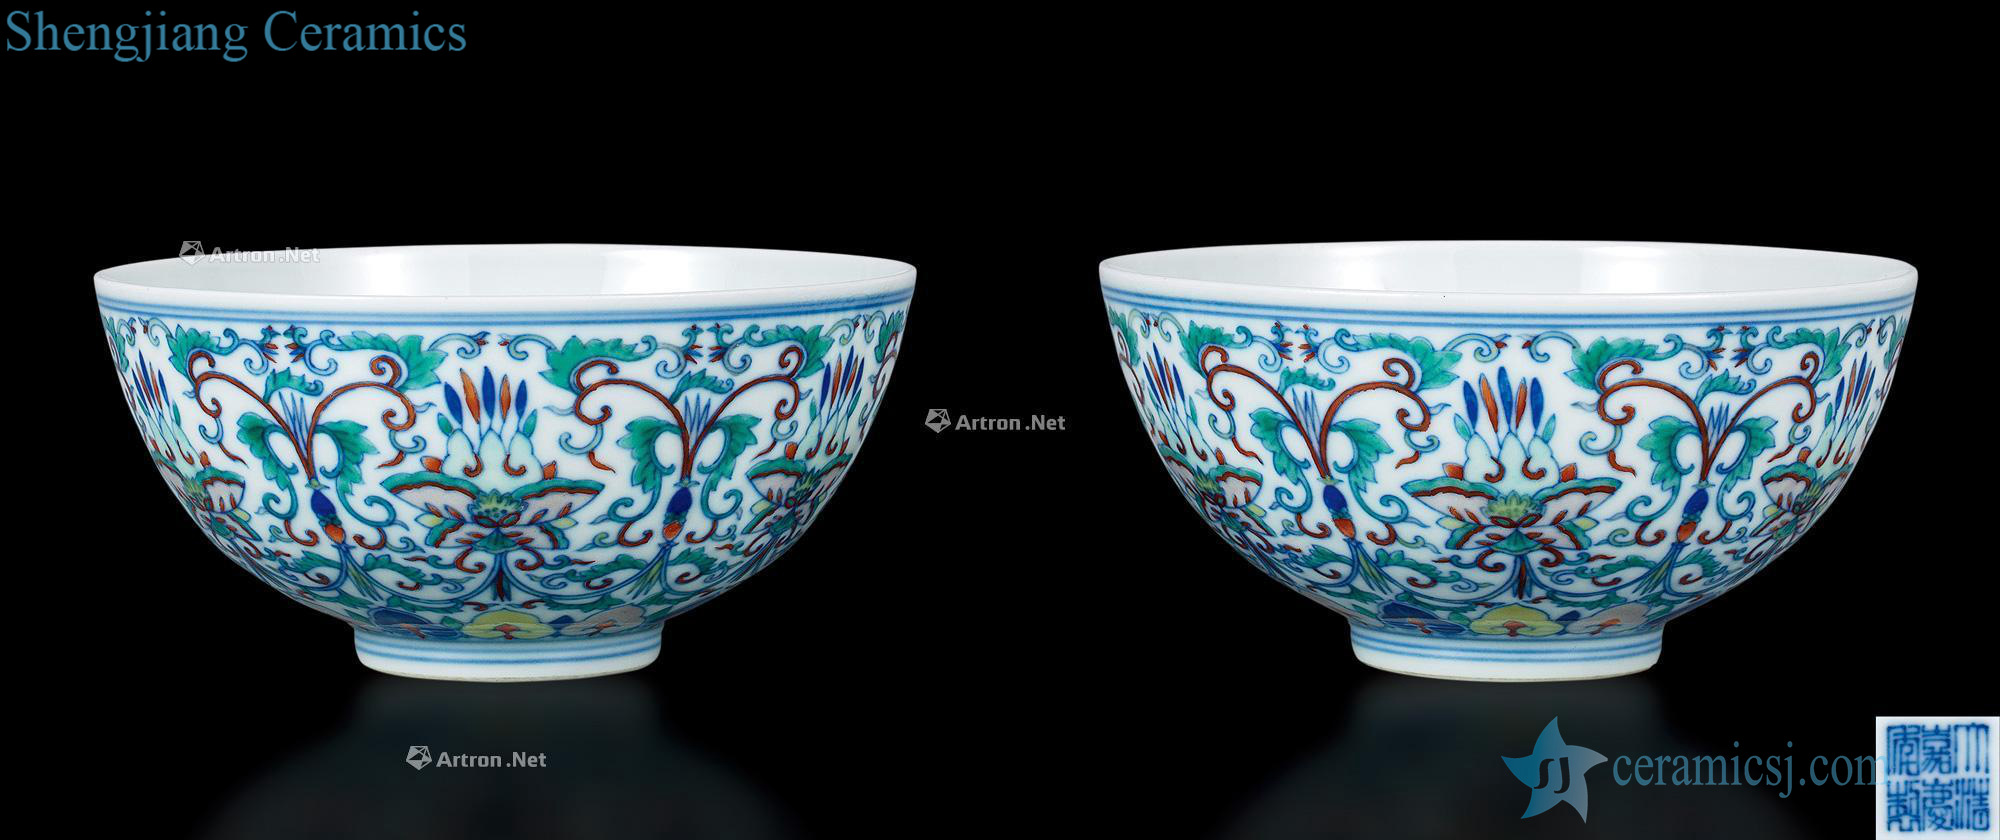 Qing jiaqing bucket colors branch flowers green-splashed bowls (a)